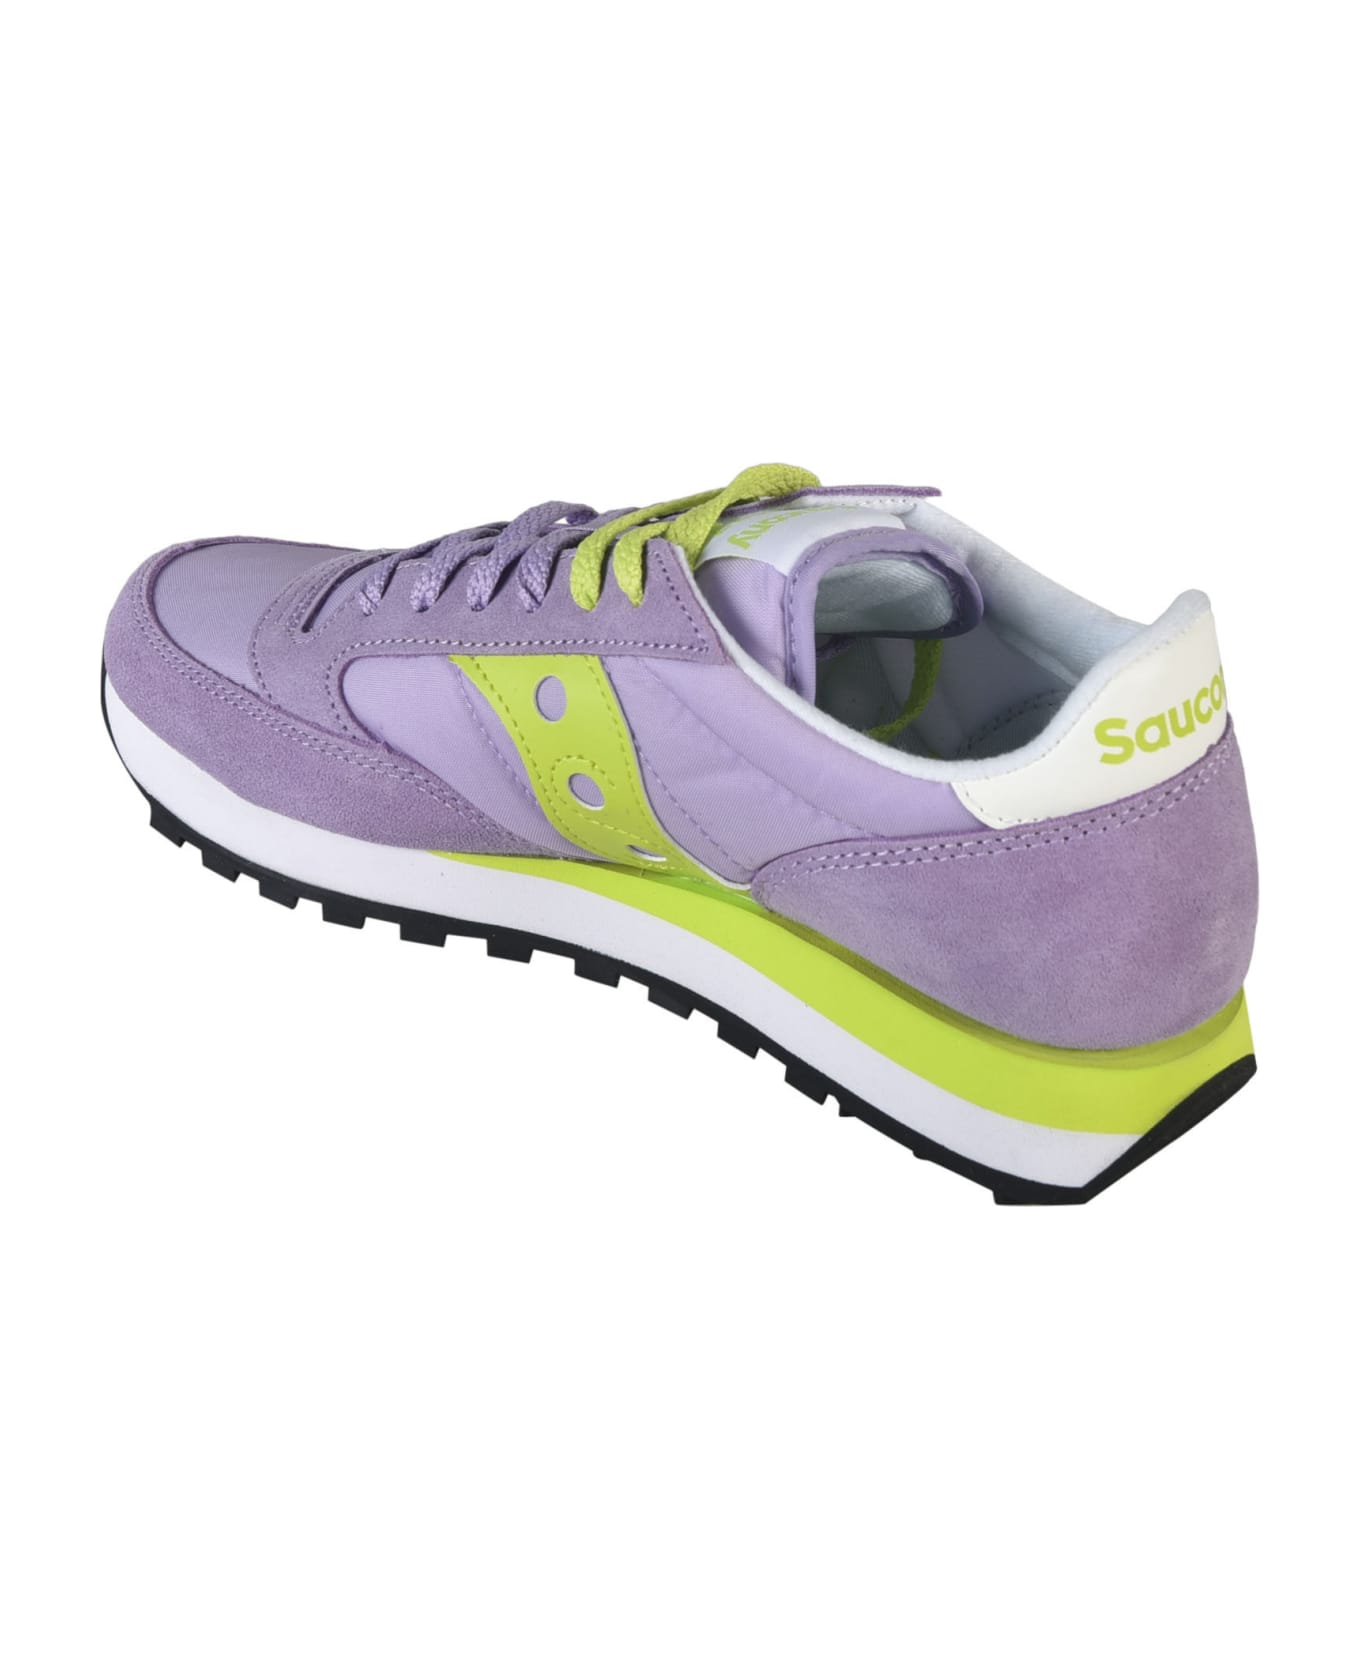 Saucony Jazz Original Sneakers - Purple/Lime スニーカー